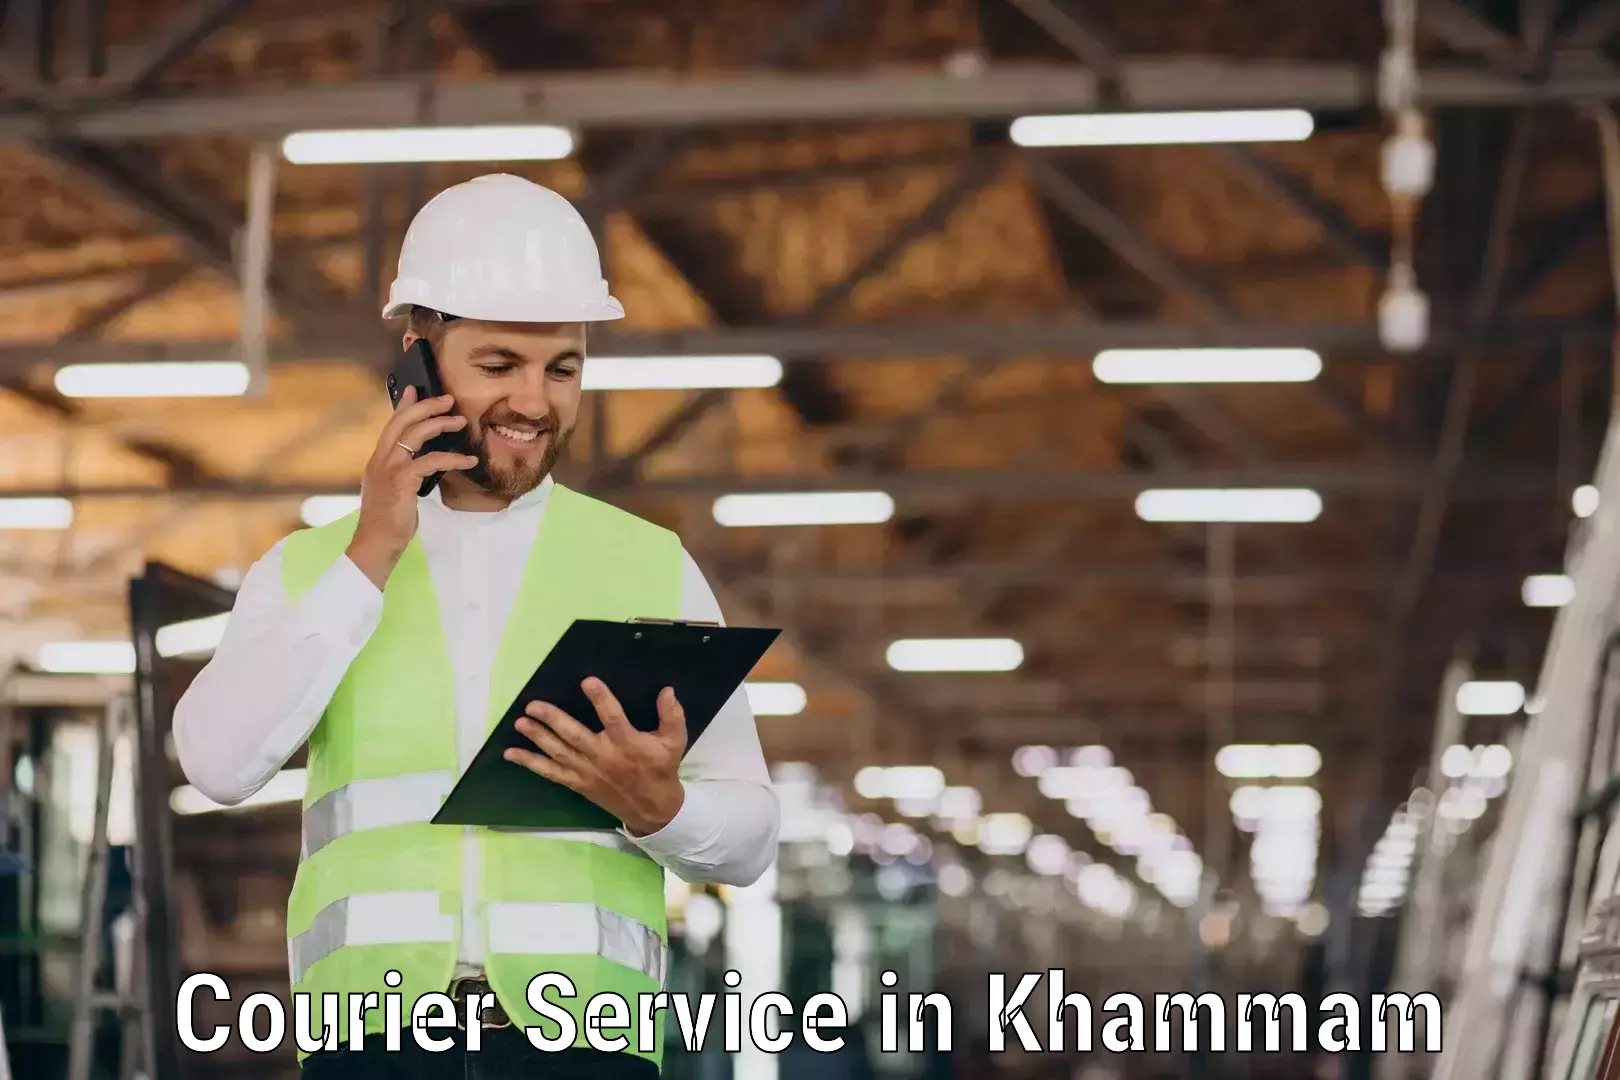 Flexible shipping options in Khammam